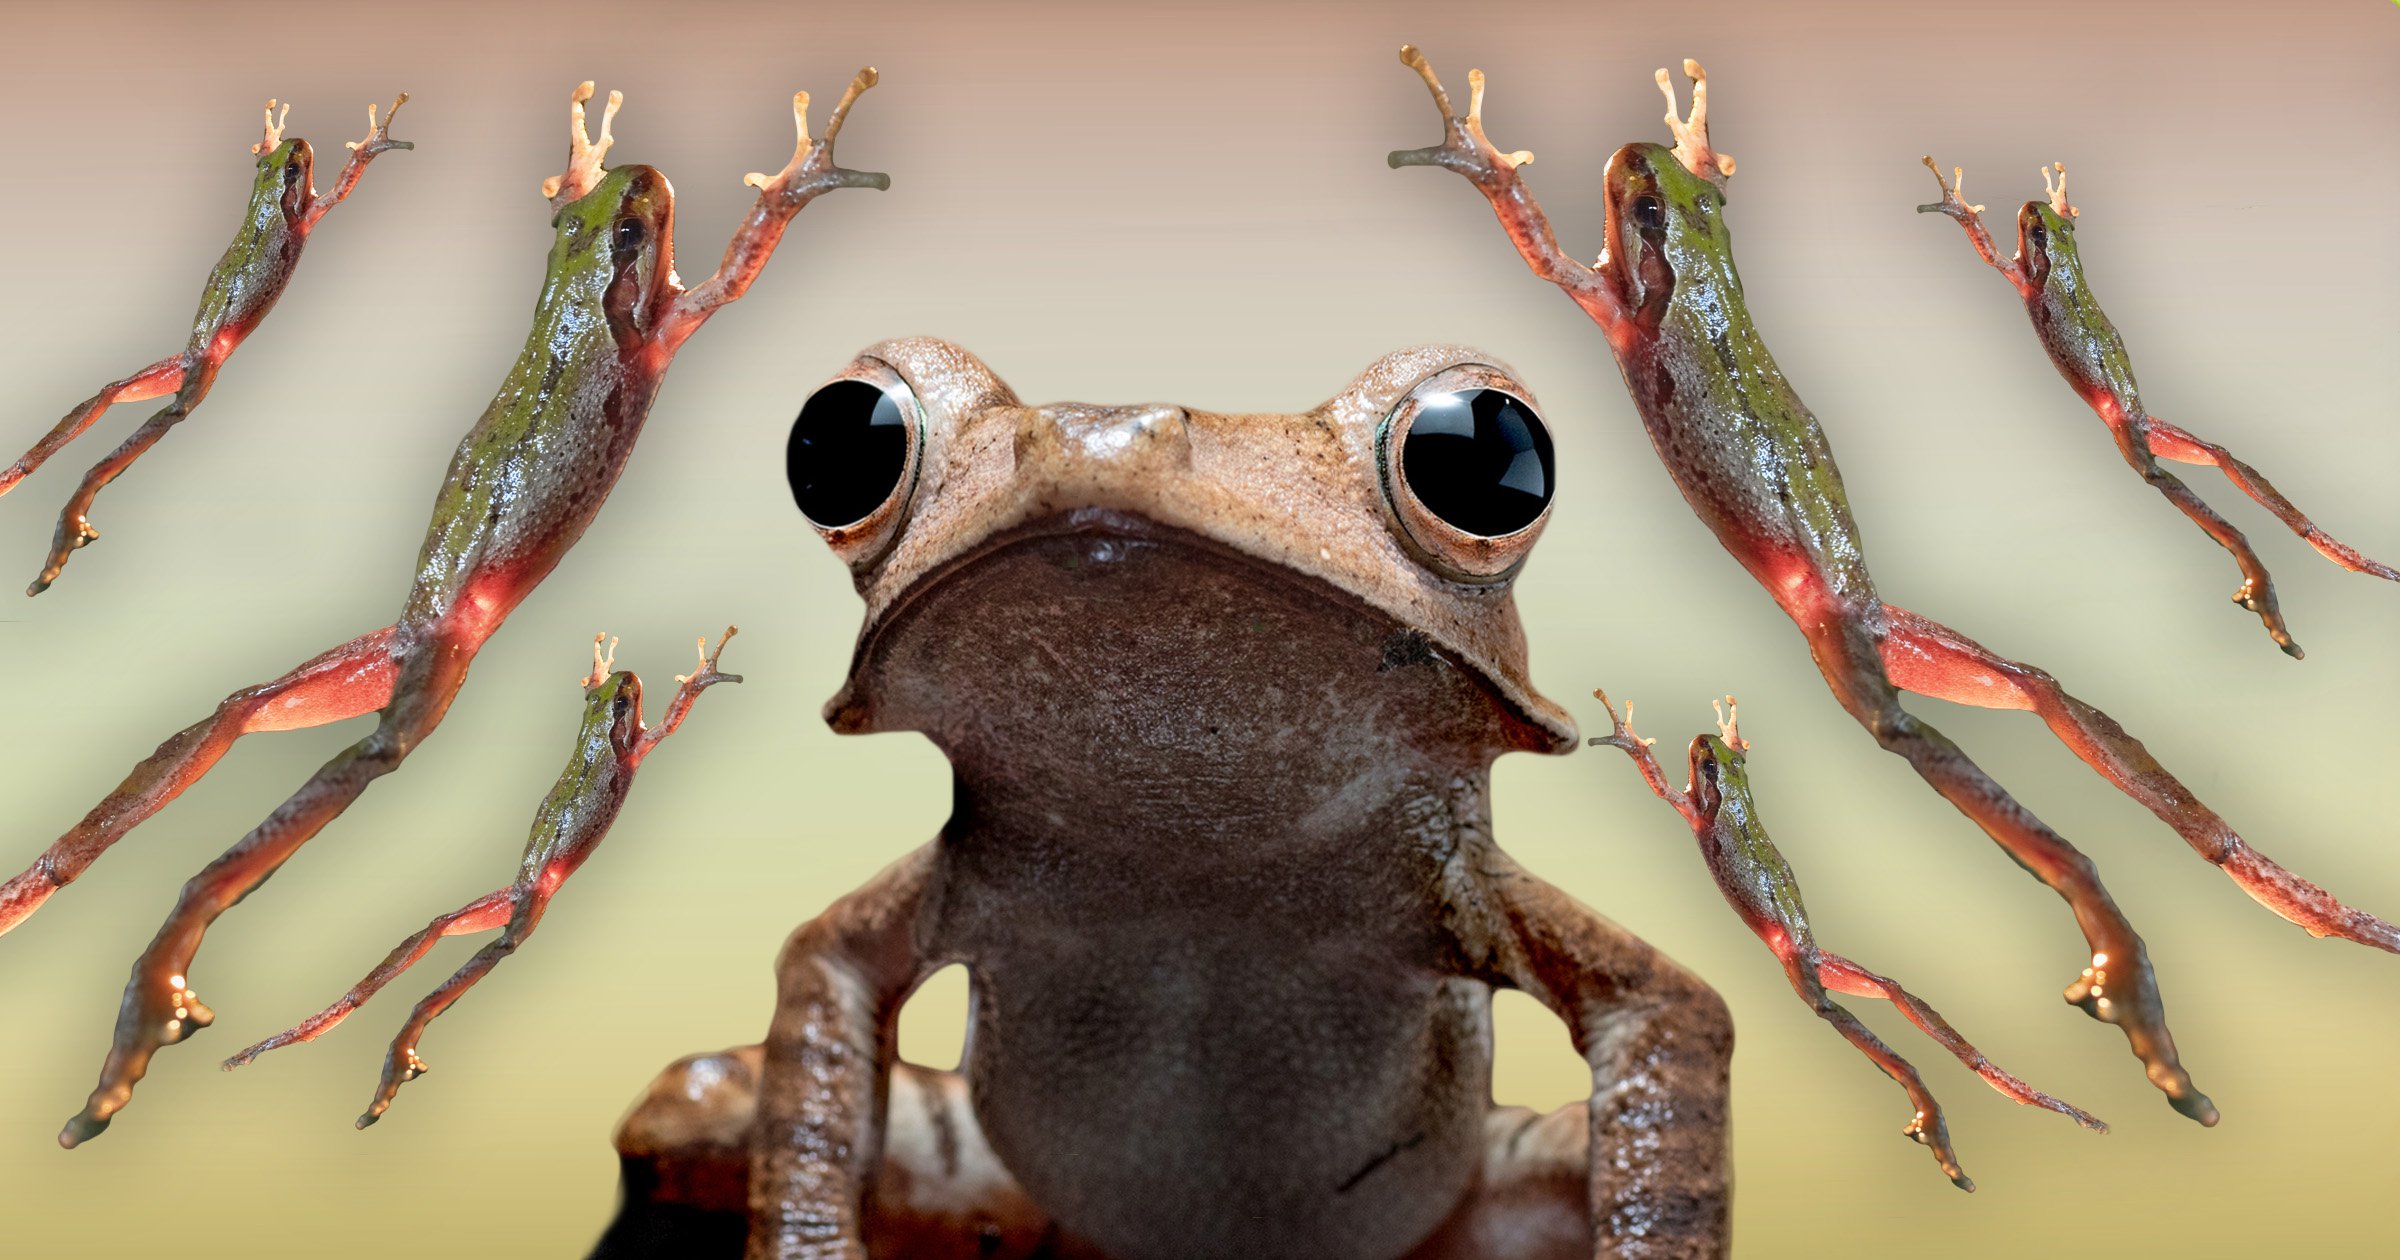 adam klich recommends Frog Leap Sex Position